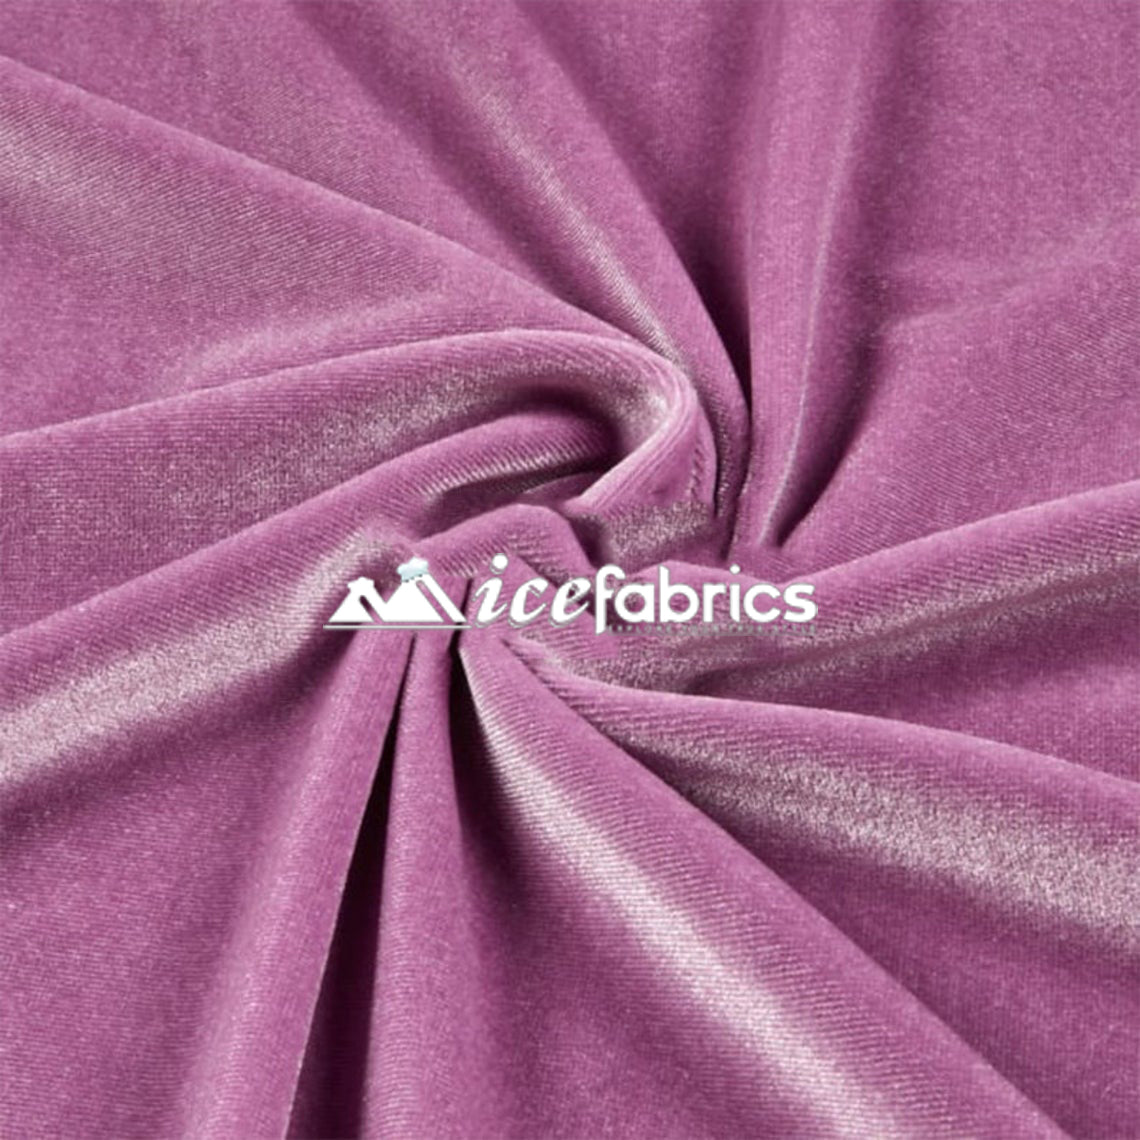 Stretch Velvet Fabric: Soft and Stretchy Velvet for Apparel